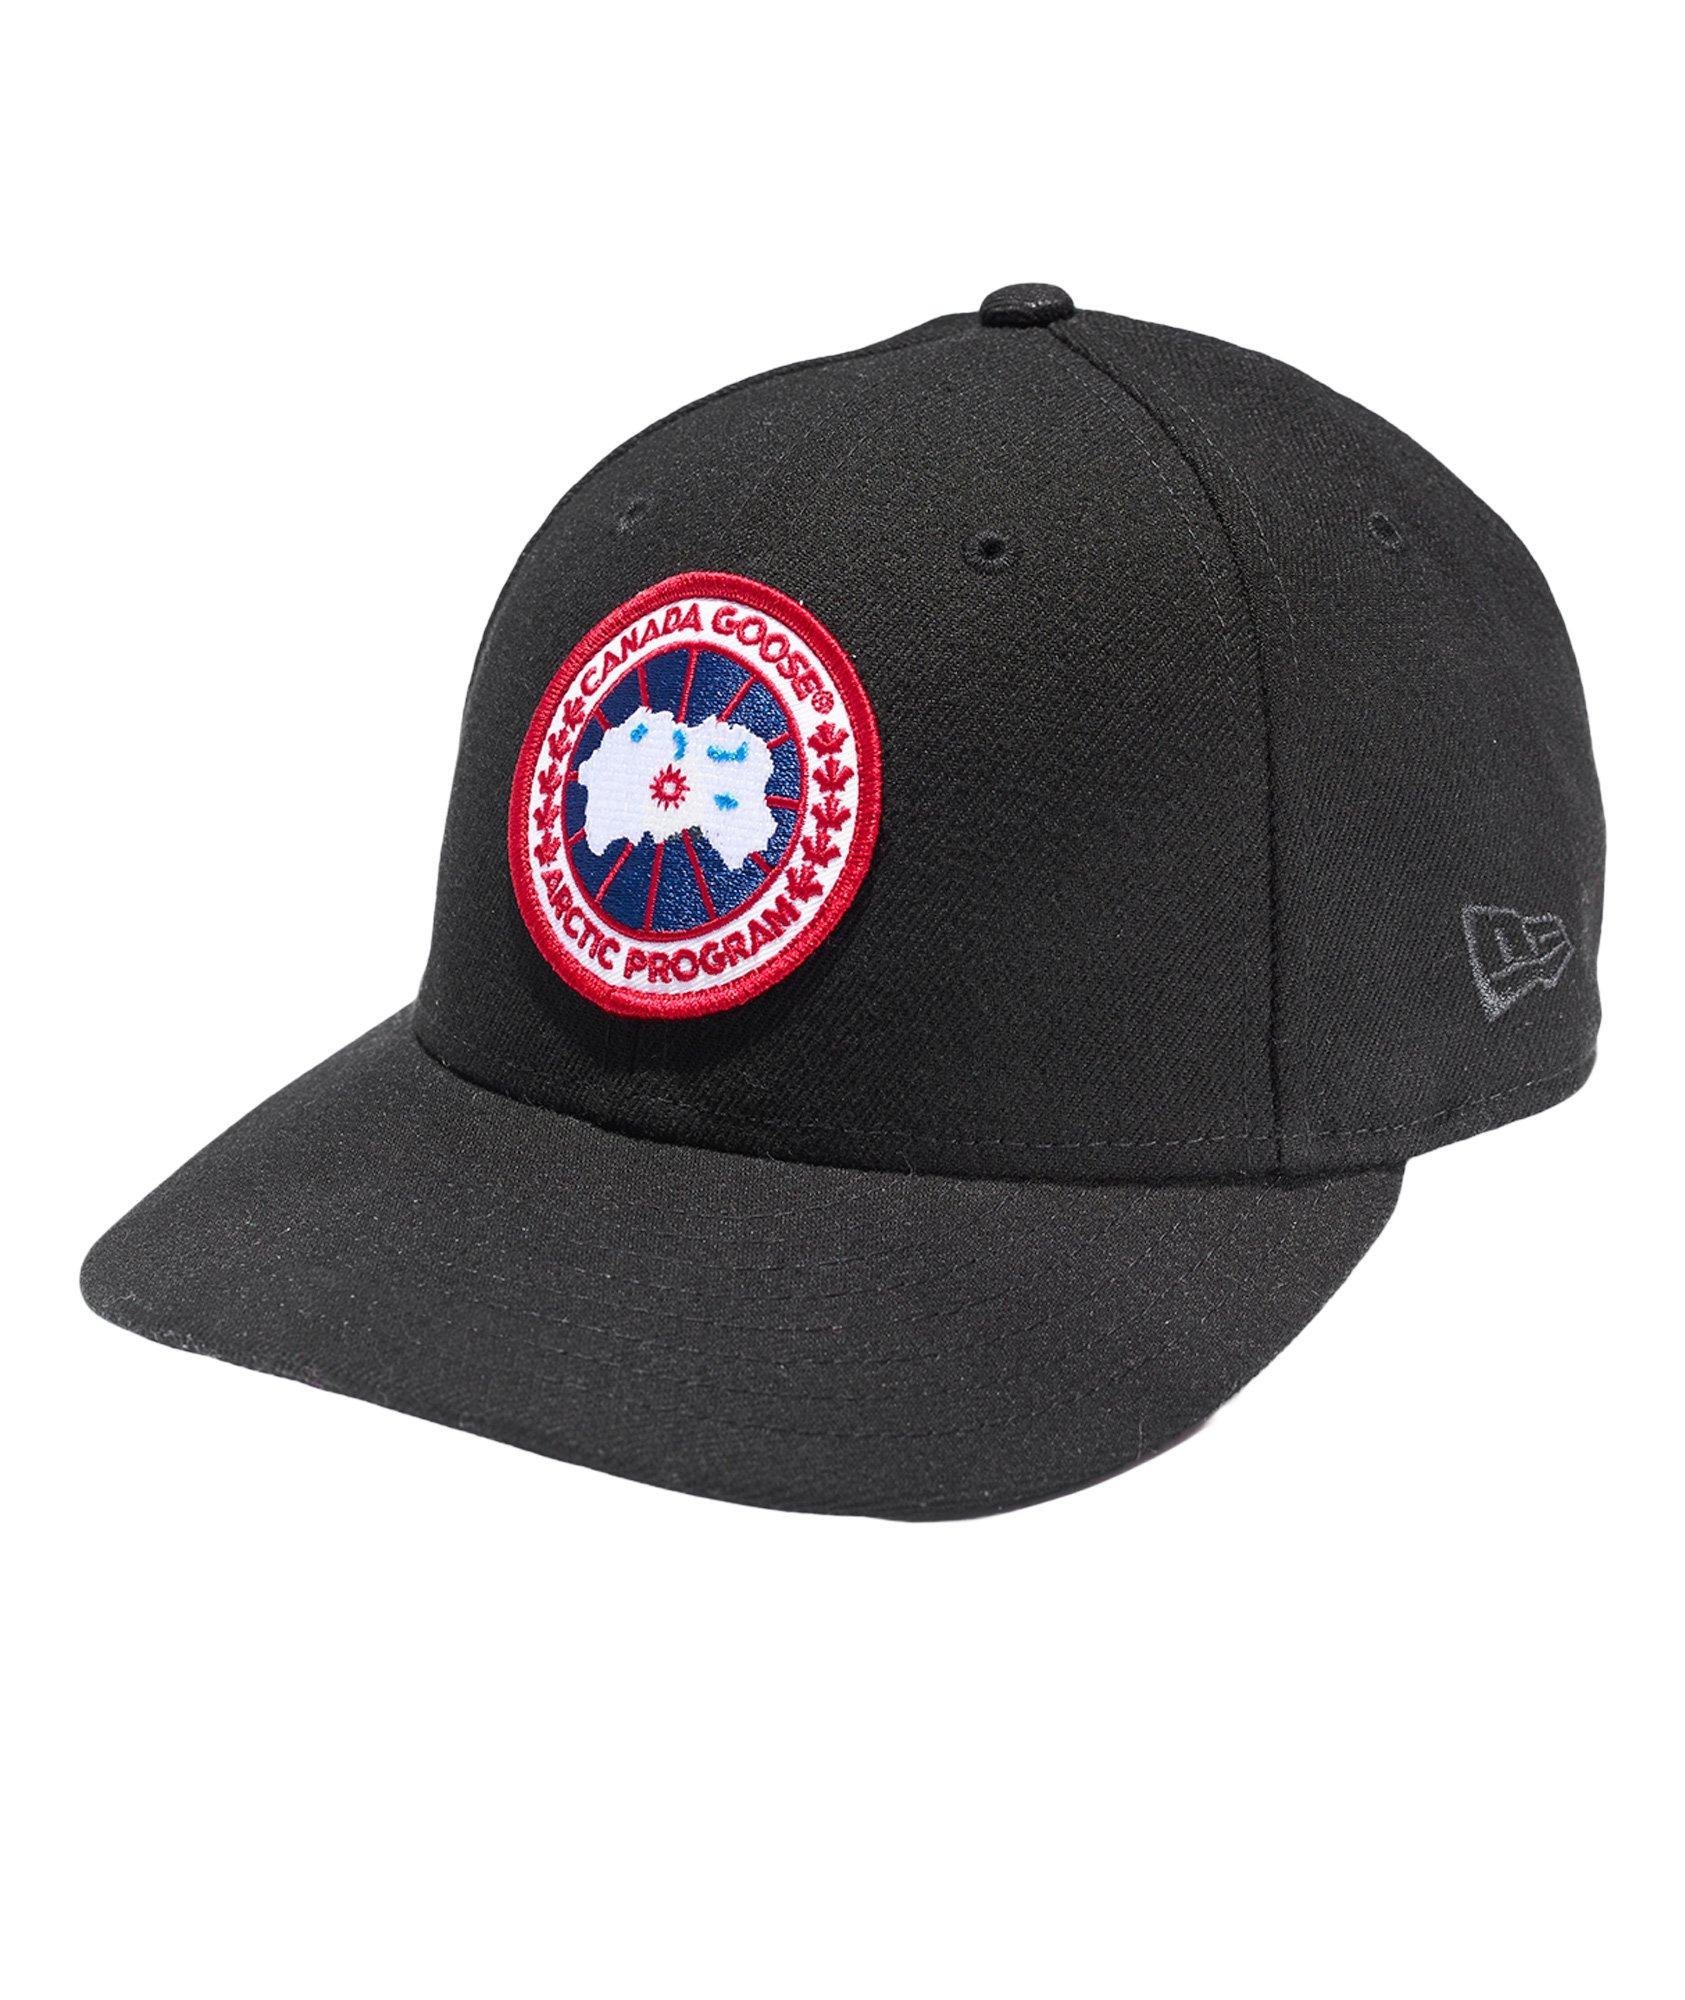 Baseball Cap image 0